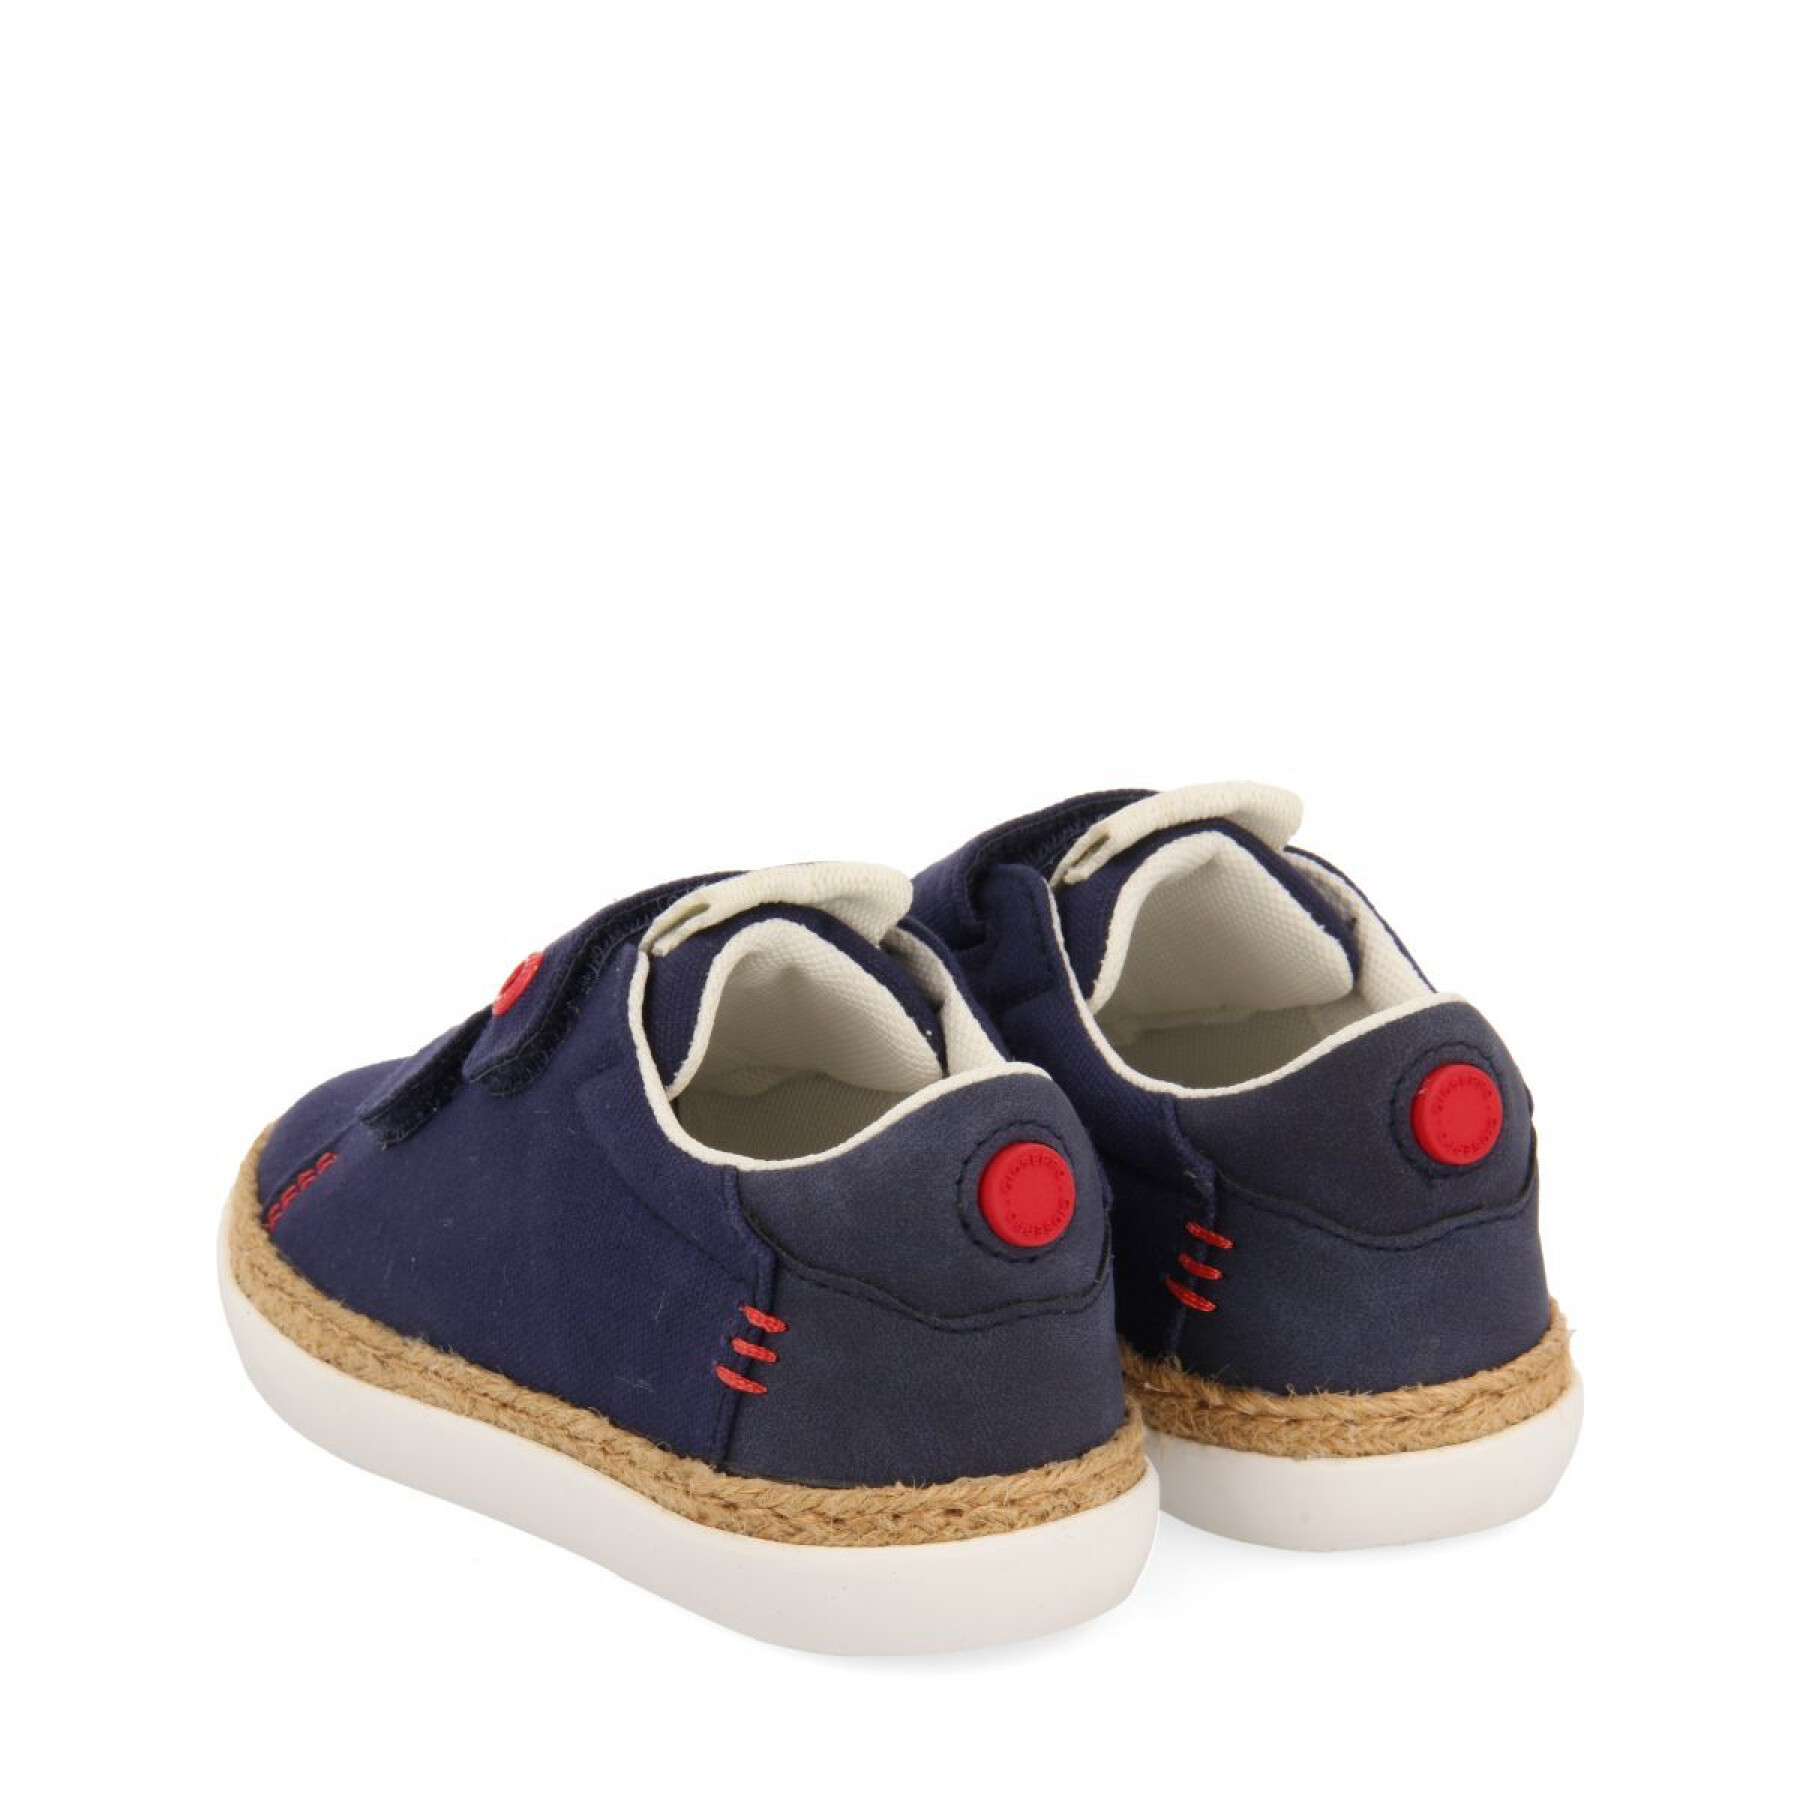 Baby sneakers Gioseppo Viera